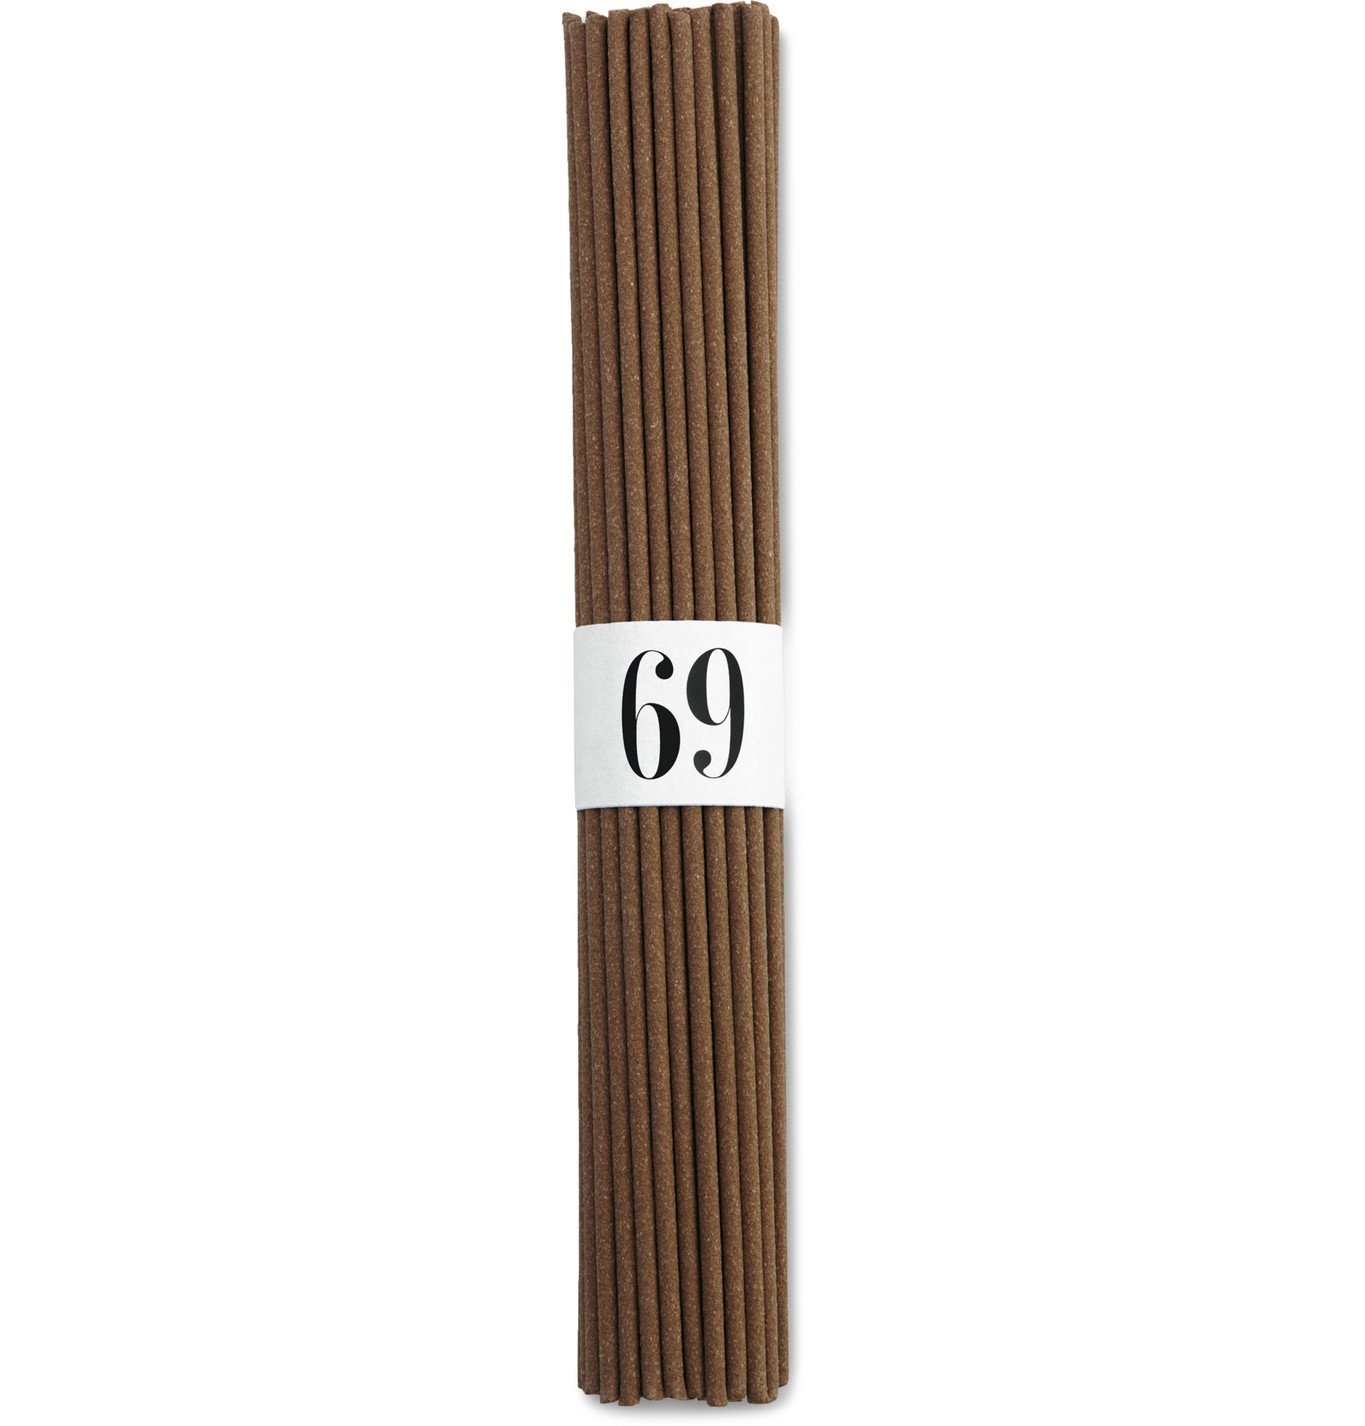 L Objet Oh Mon Dieu No 69 Incense Sticks Colorless L Objet